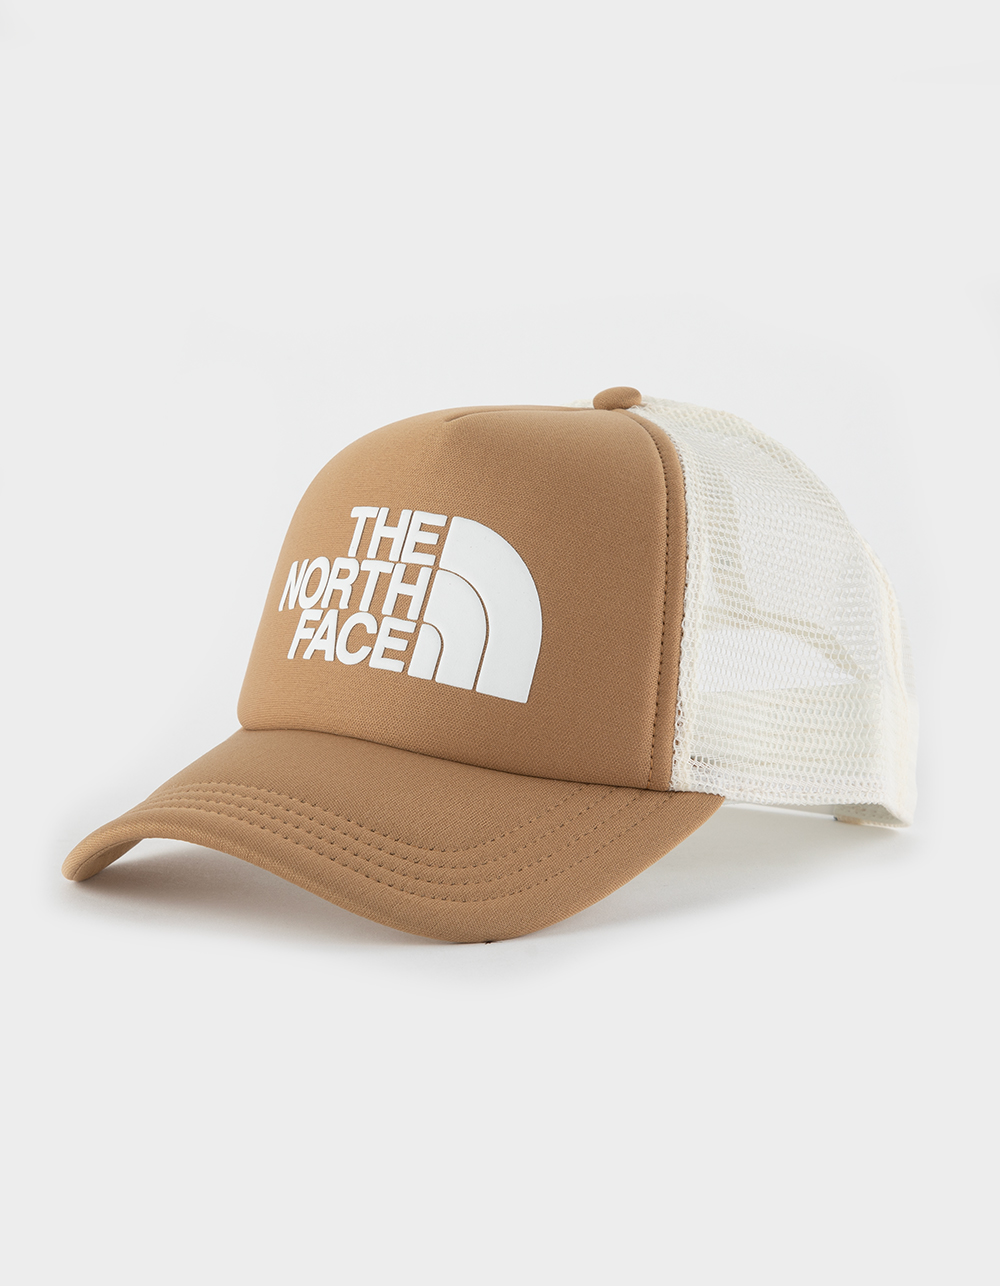 THE NORTH FACE Logo Mens Trucker Hat